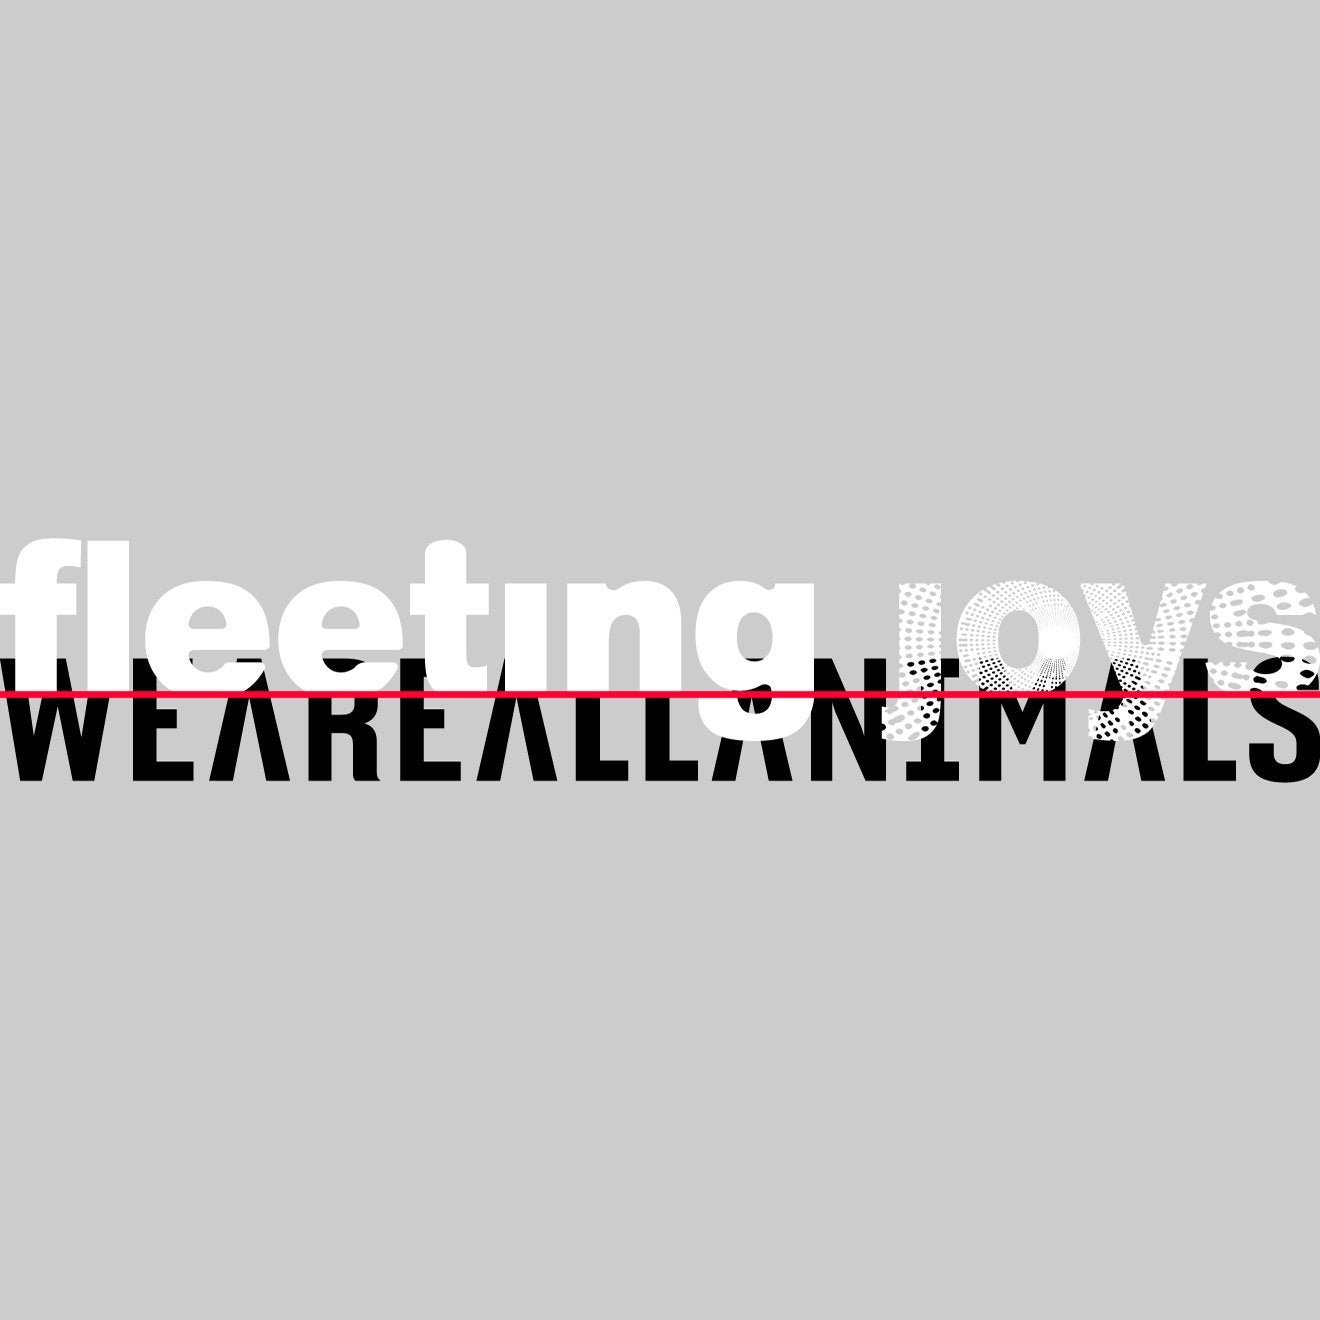 Fleeting Joys × WEAREALLANIMALSリリース決定のお知らせ - WEAREALLANIMALS